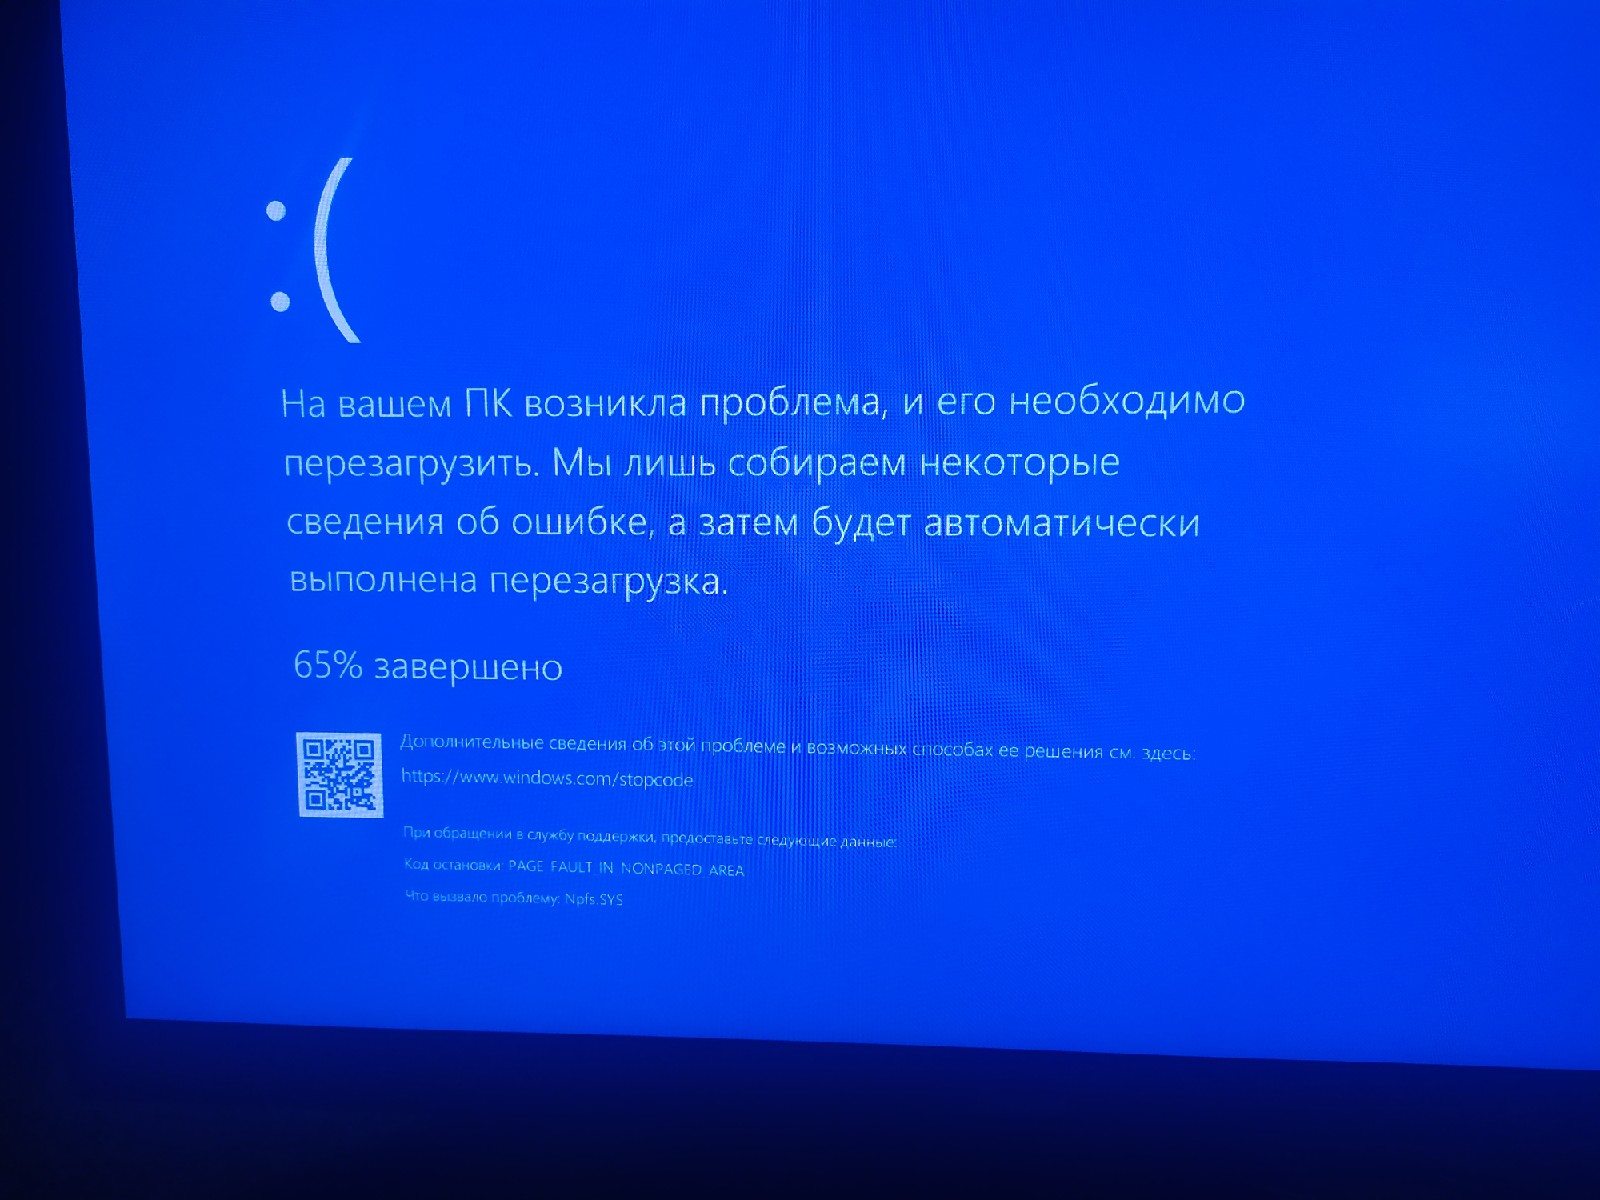 Ошибка page in nonpaged area. Экран смерти Windows 10. Ошибка синий экран Windows 10. Синий экран смерти Windows 10 видеокарта. Bddci.sys синий экран.